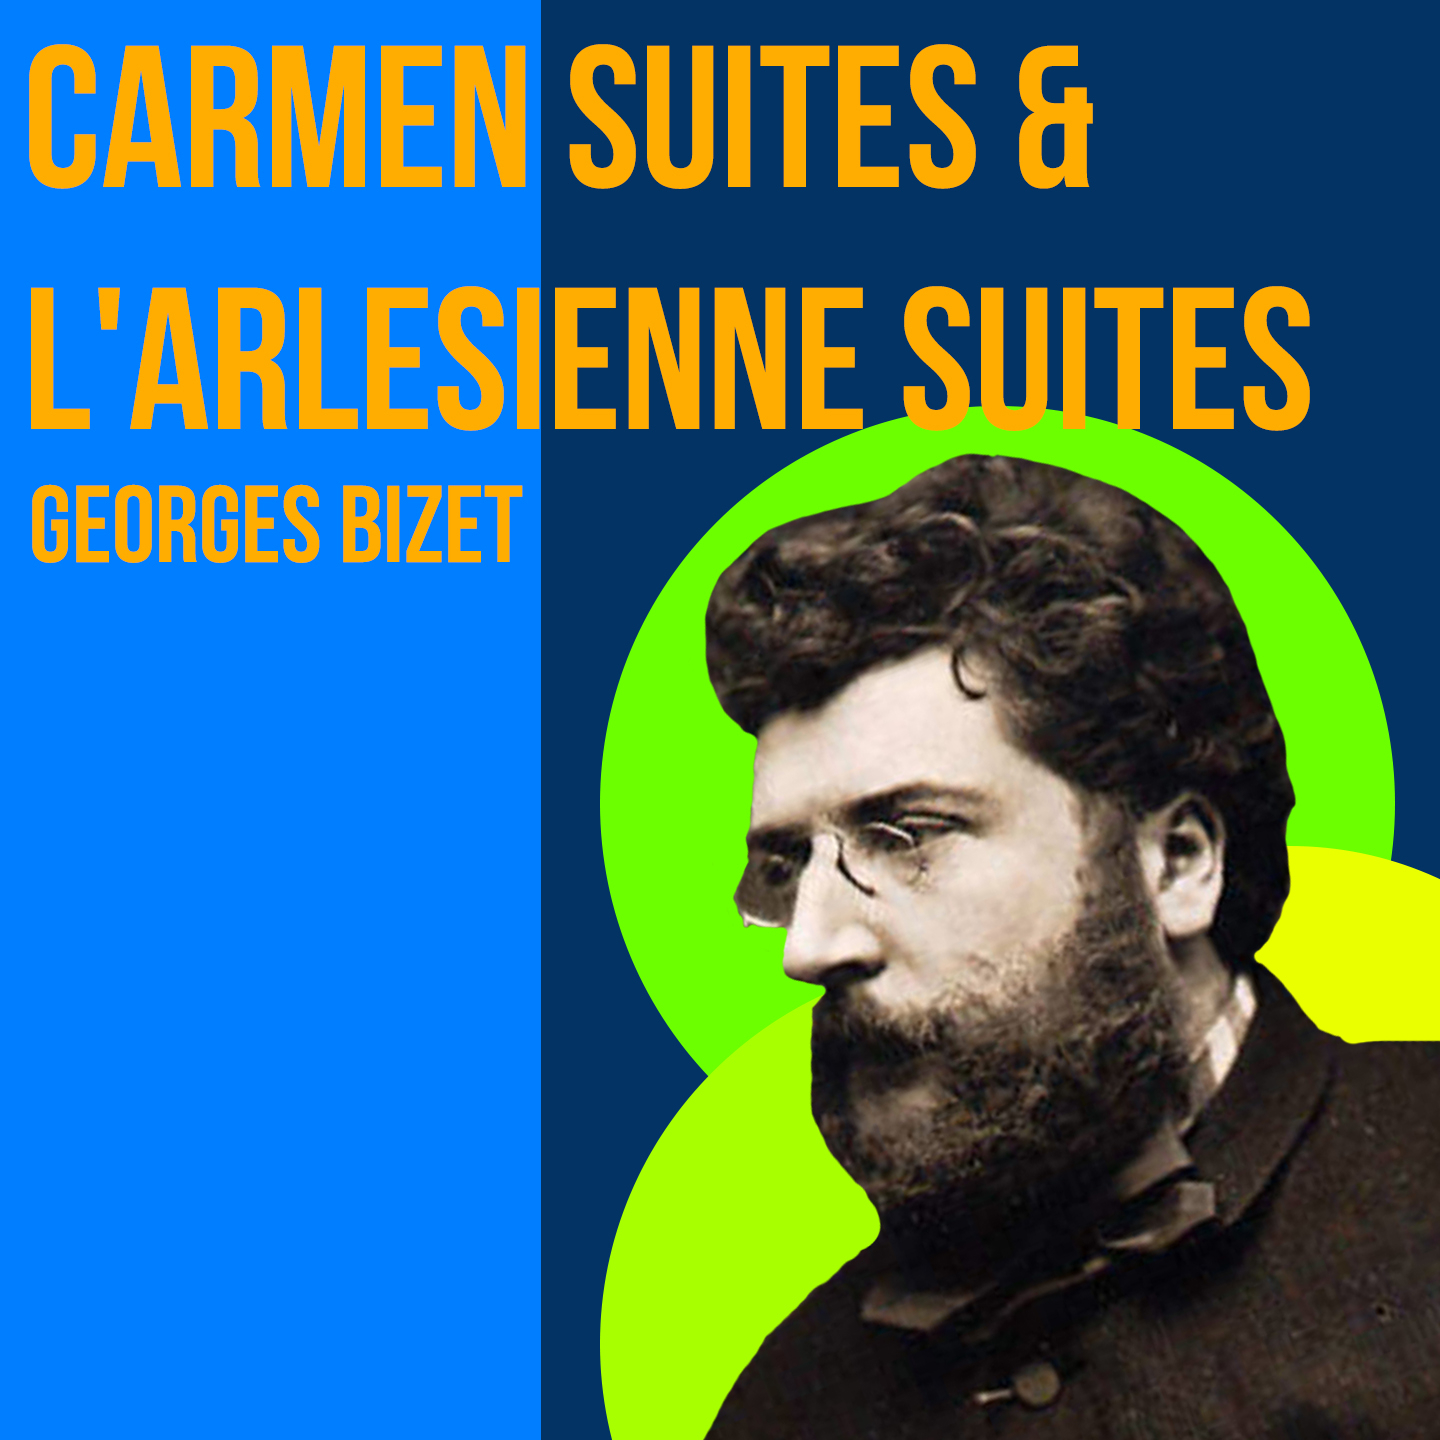 Carmen Suite #1 - The Toreadors